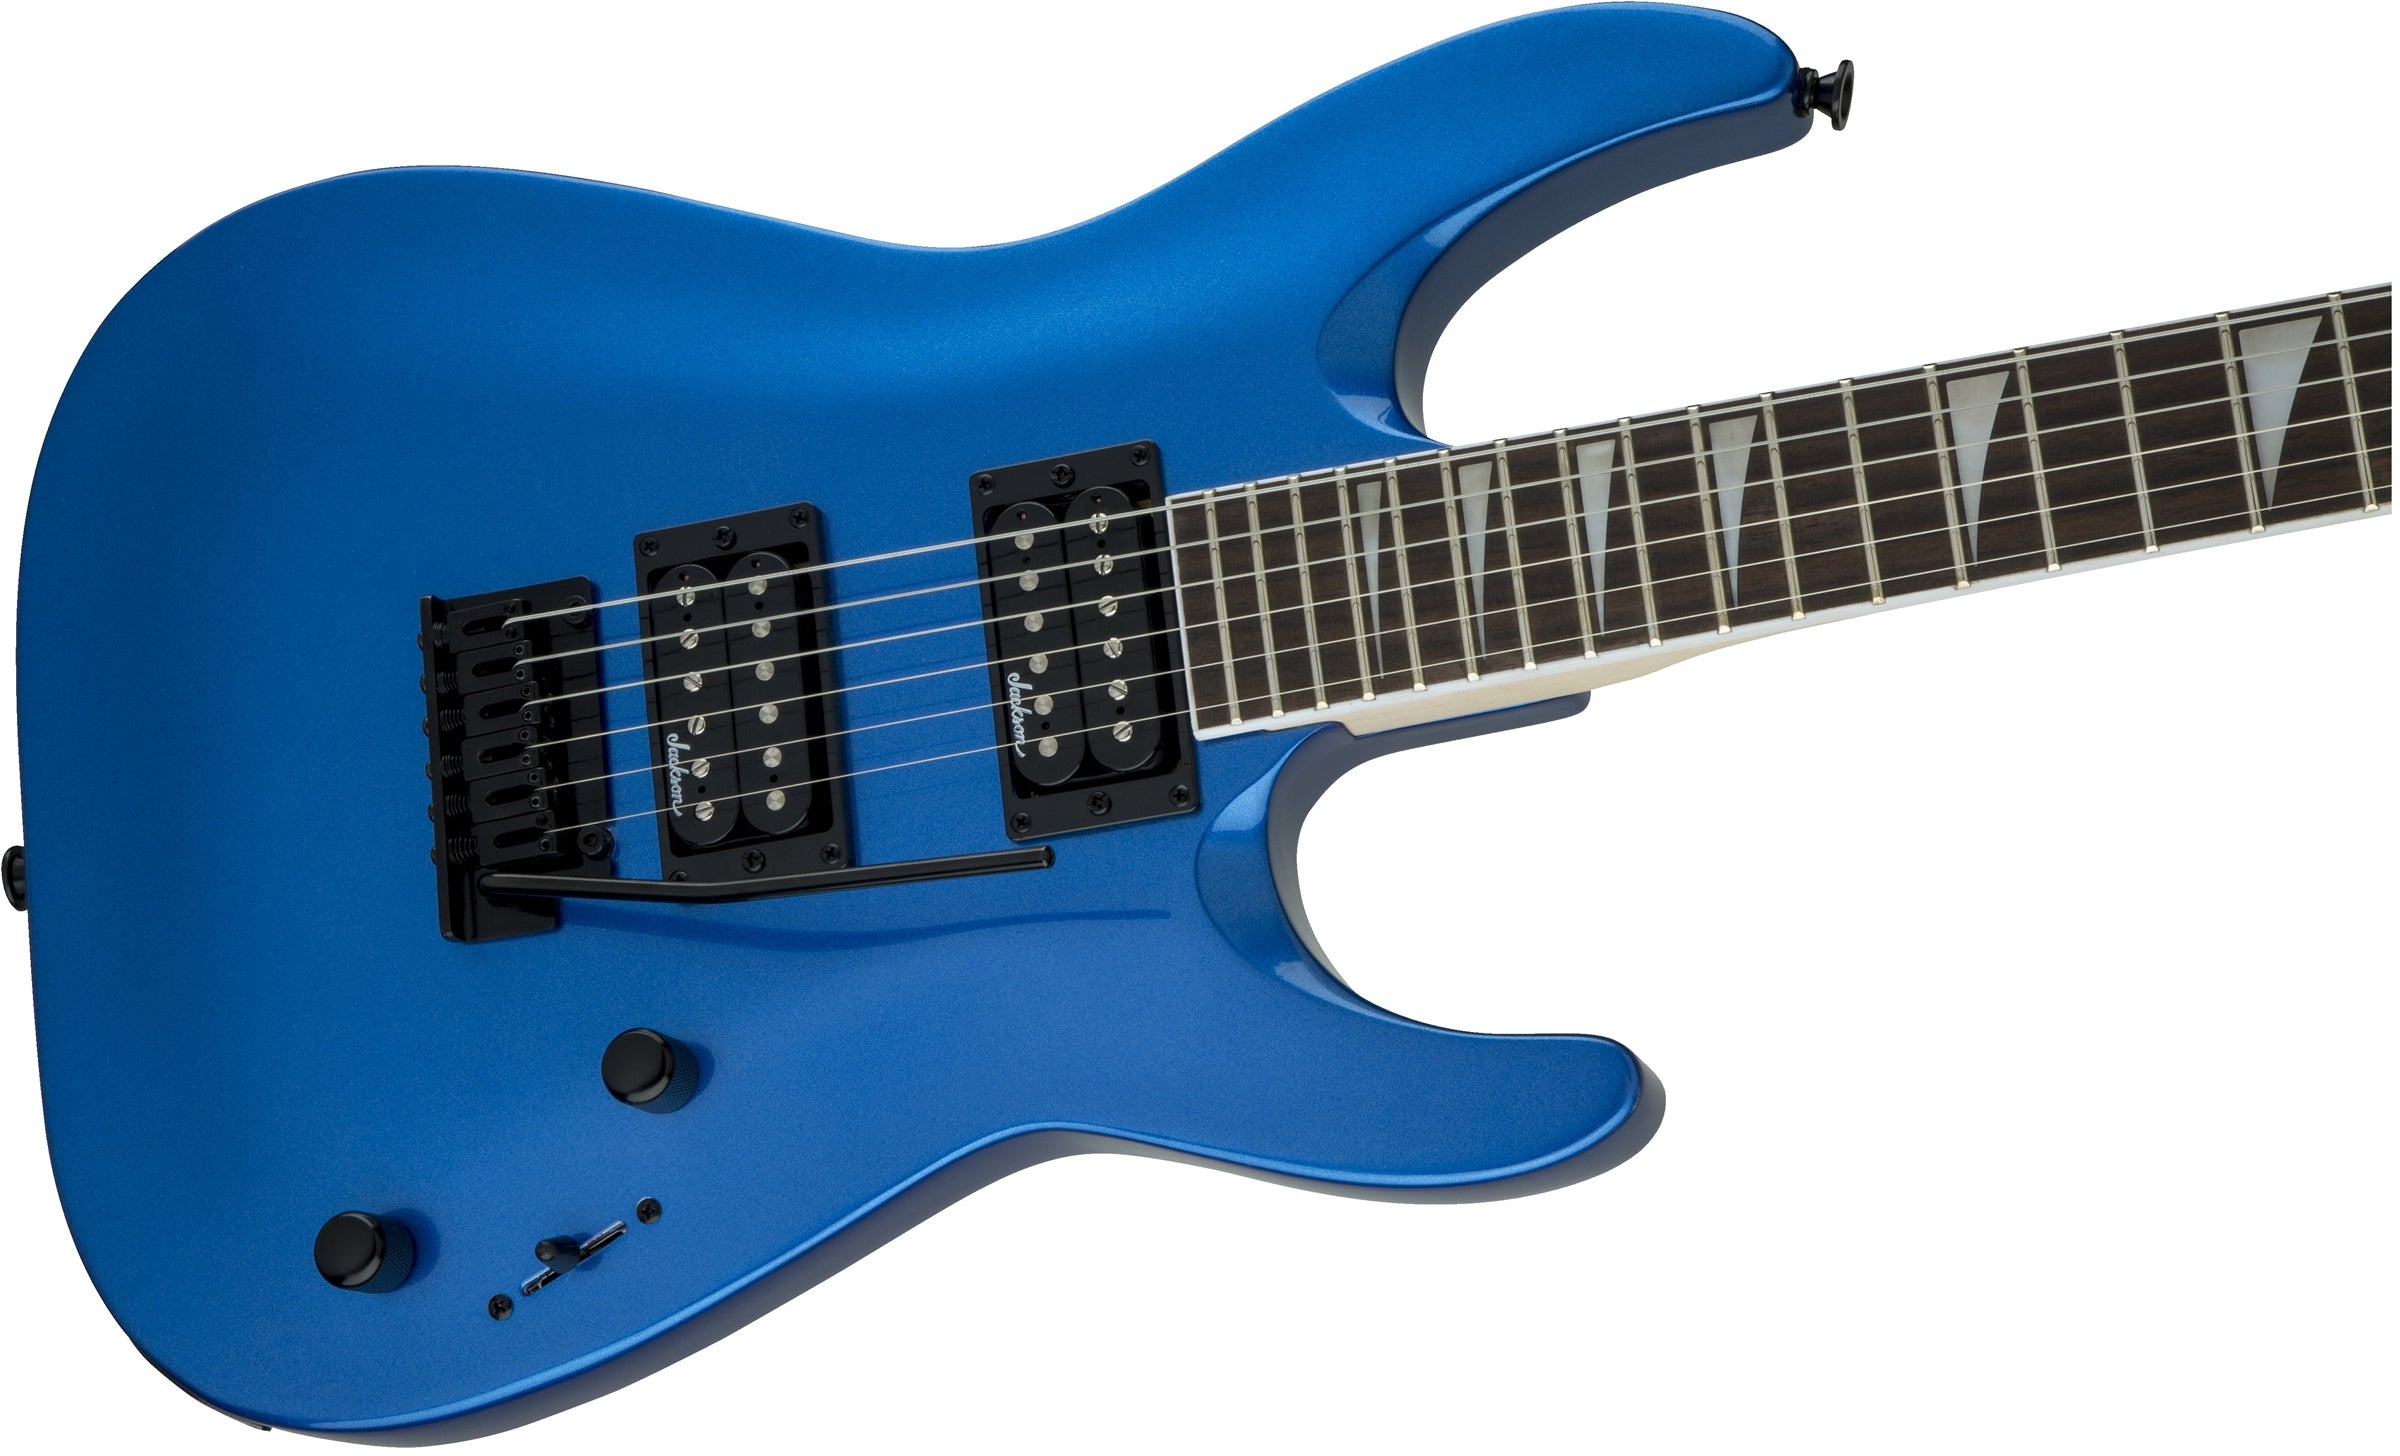 Jackson Dinky Arch Top JS22 Dka Solidbody Electric Guitar - Metallic Blue